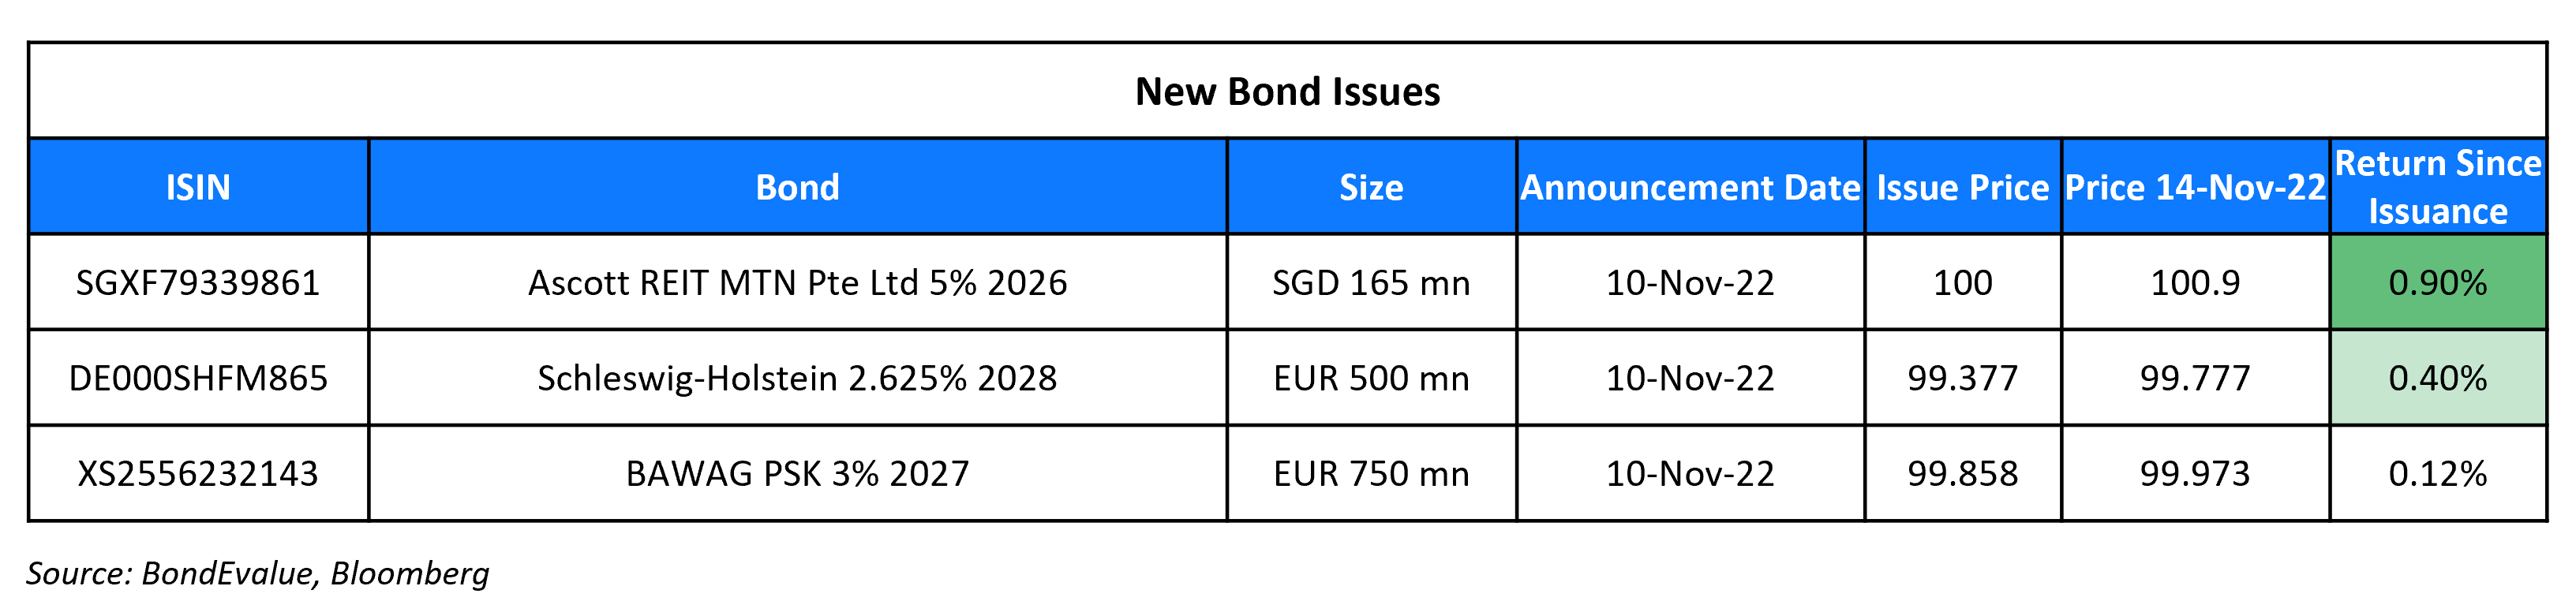 New Bond Issues 14 Nov 22